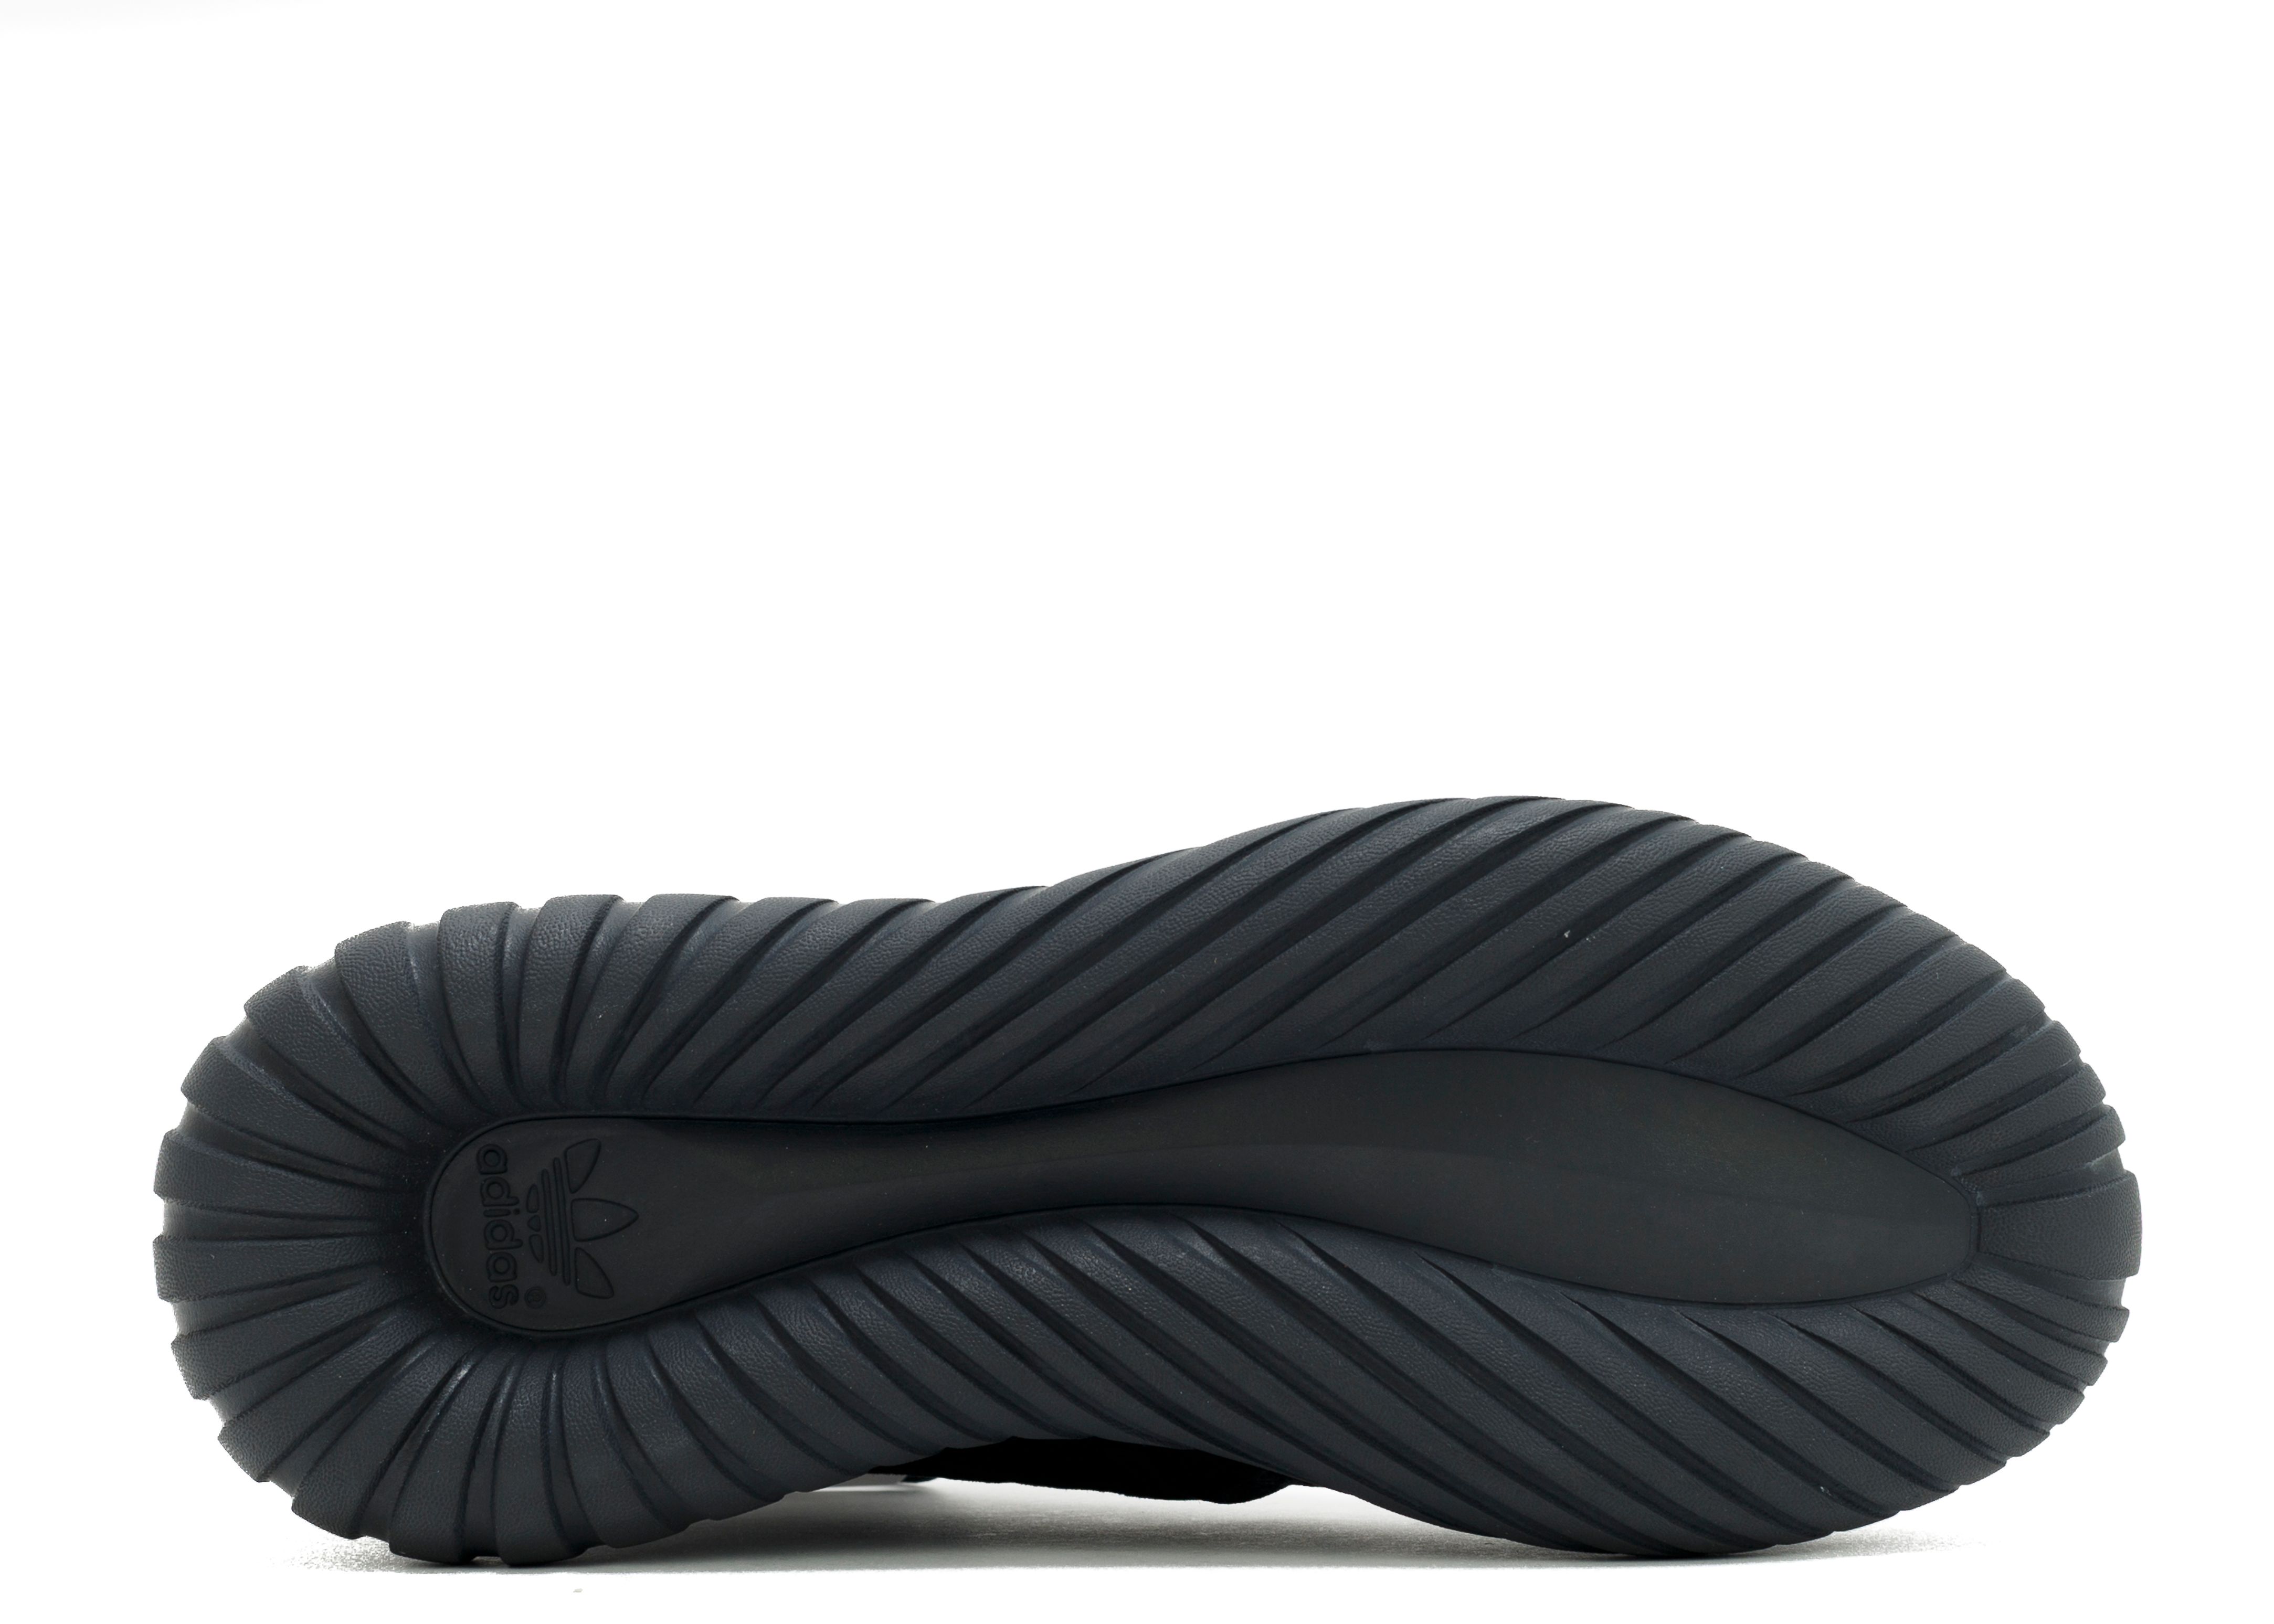 Adidas Men 's Tubular X PK Casual Sneakers from Macy' s